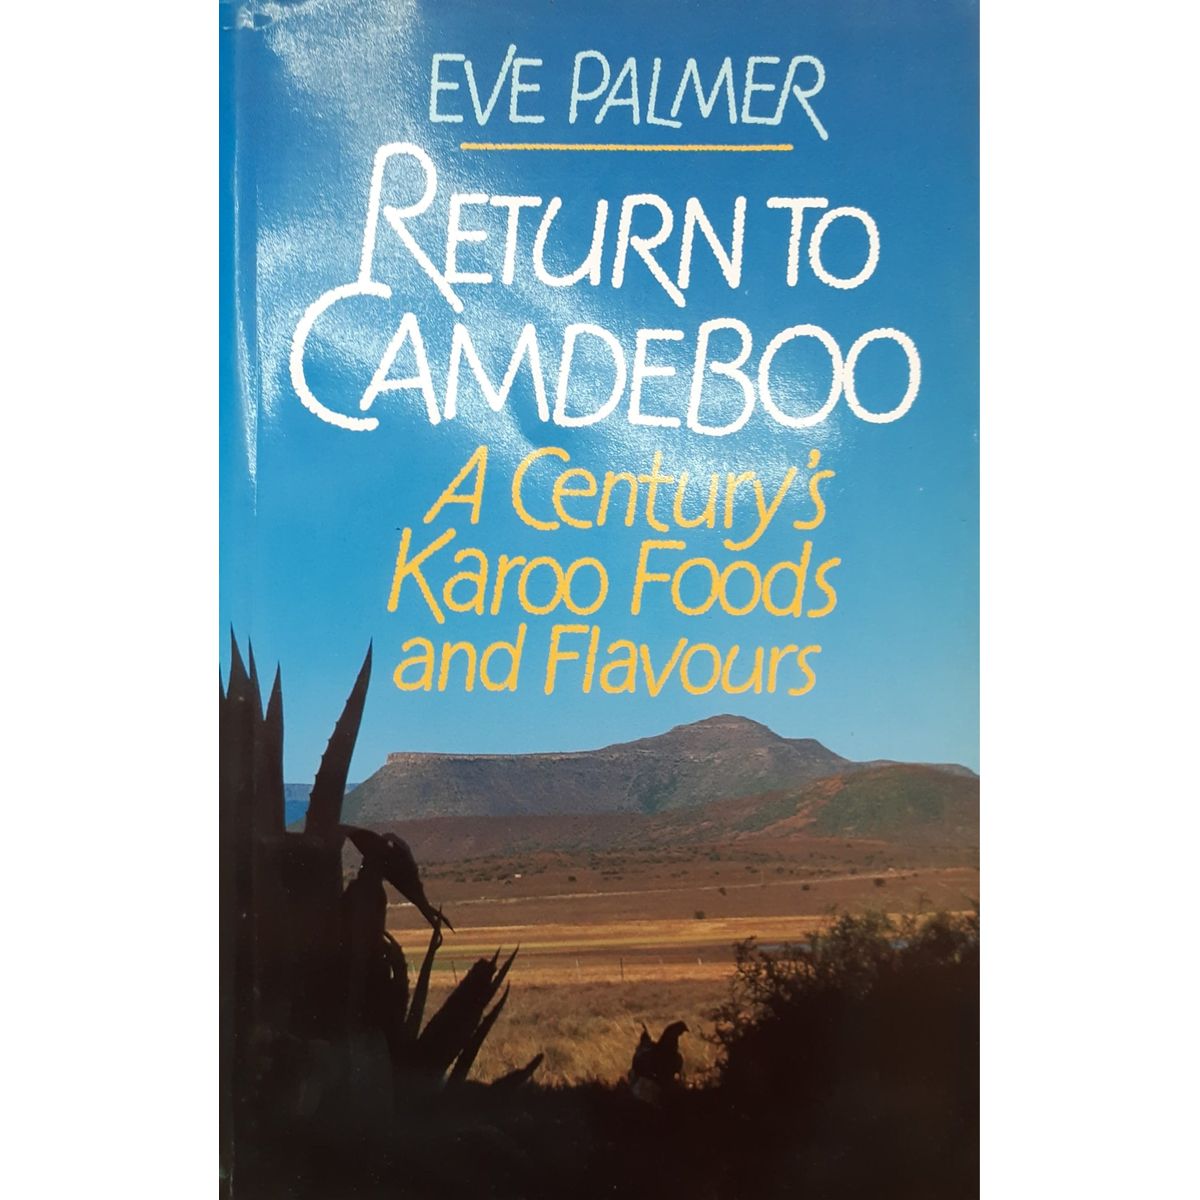 ISBN: 9780624031468 / 0624031462 - The Return to Camdeboo by Eve Palmer [1992]